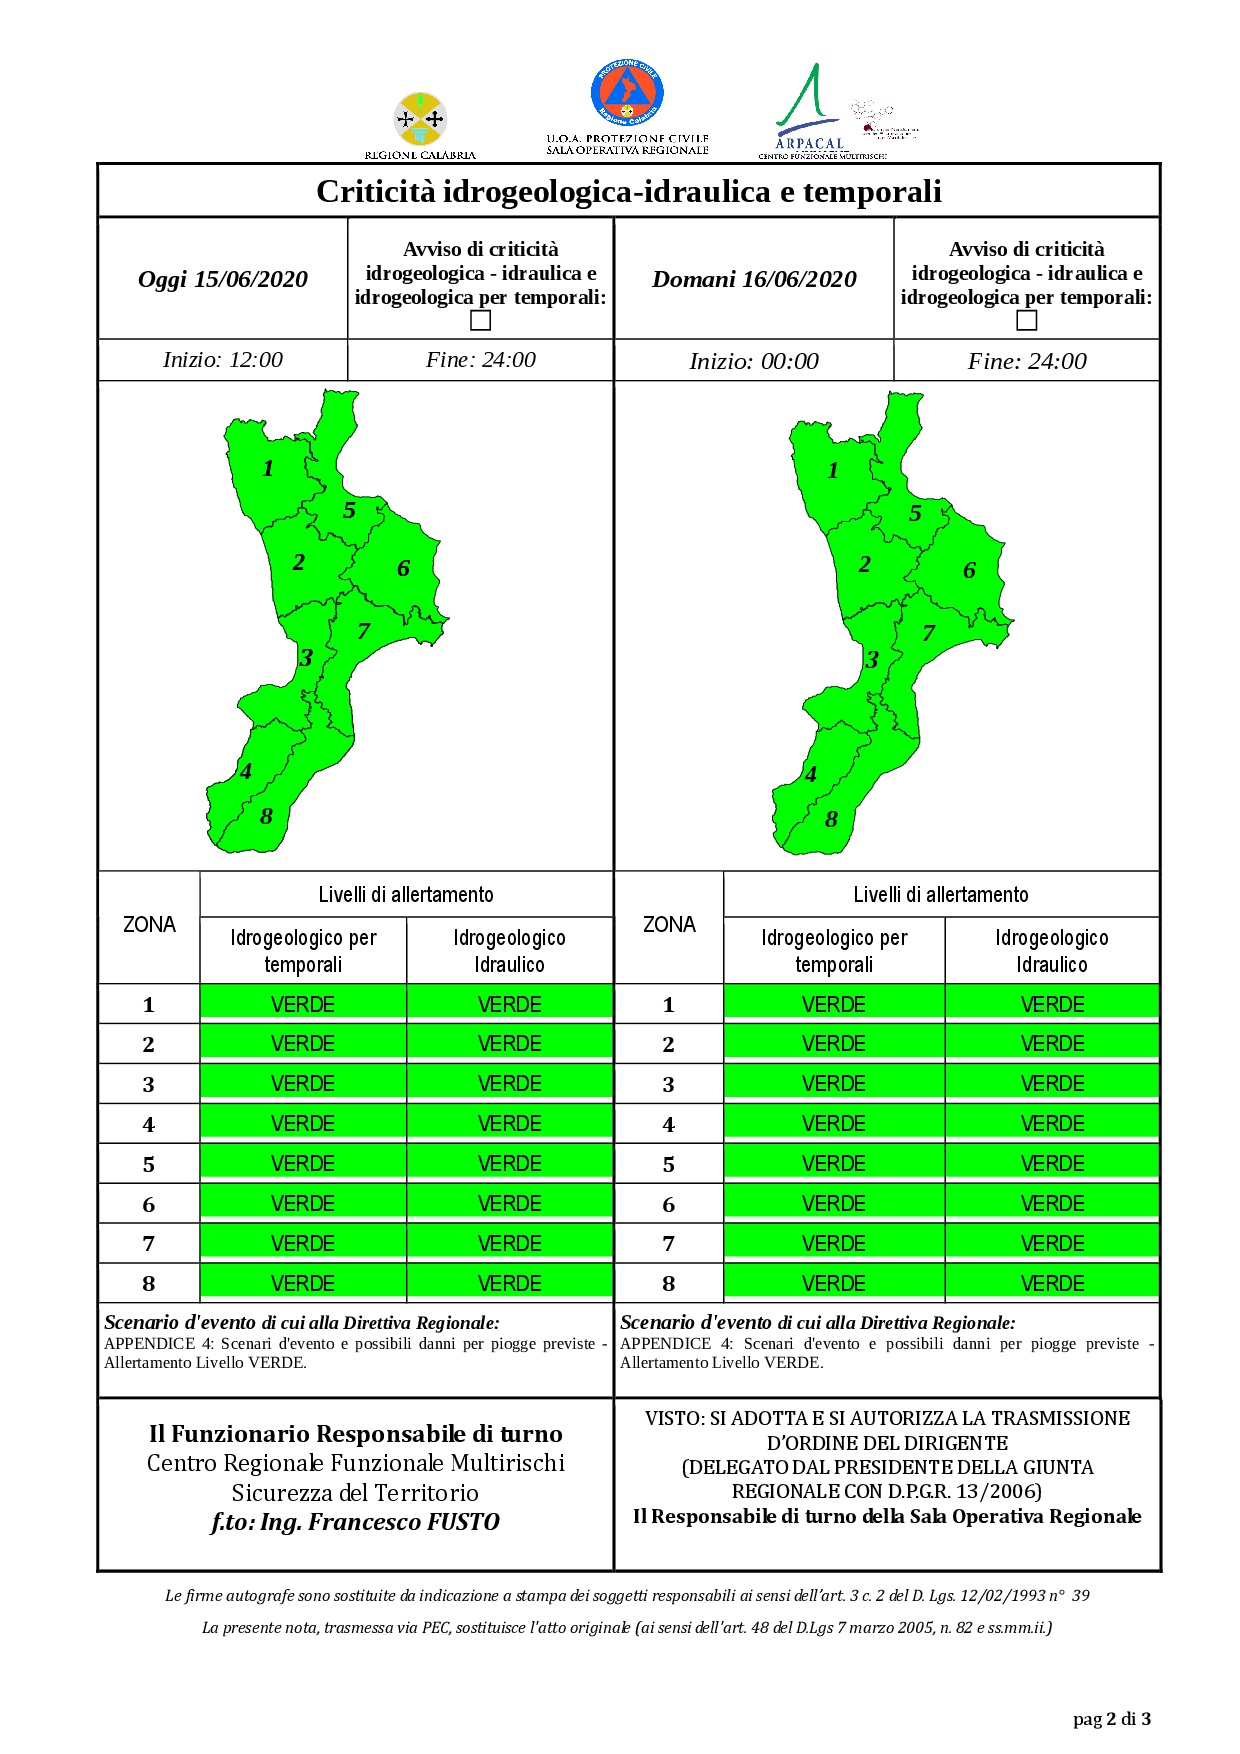 Criticità idrogeologica-idraulica e temporali in Calabria 15-06-2020